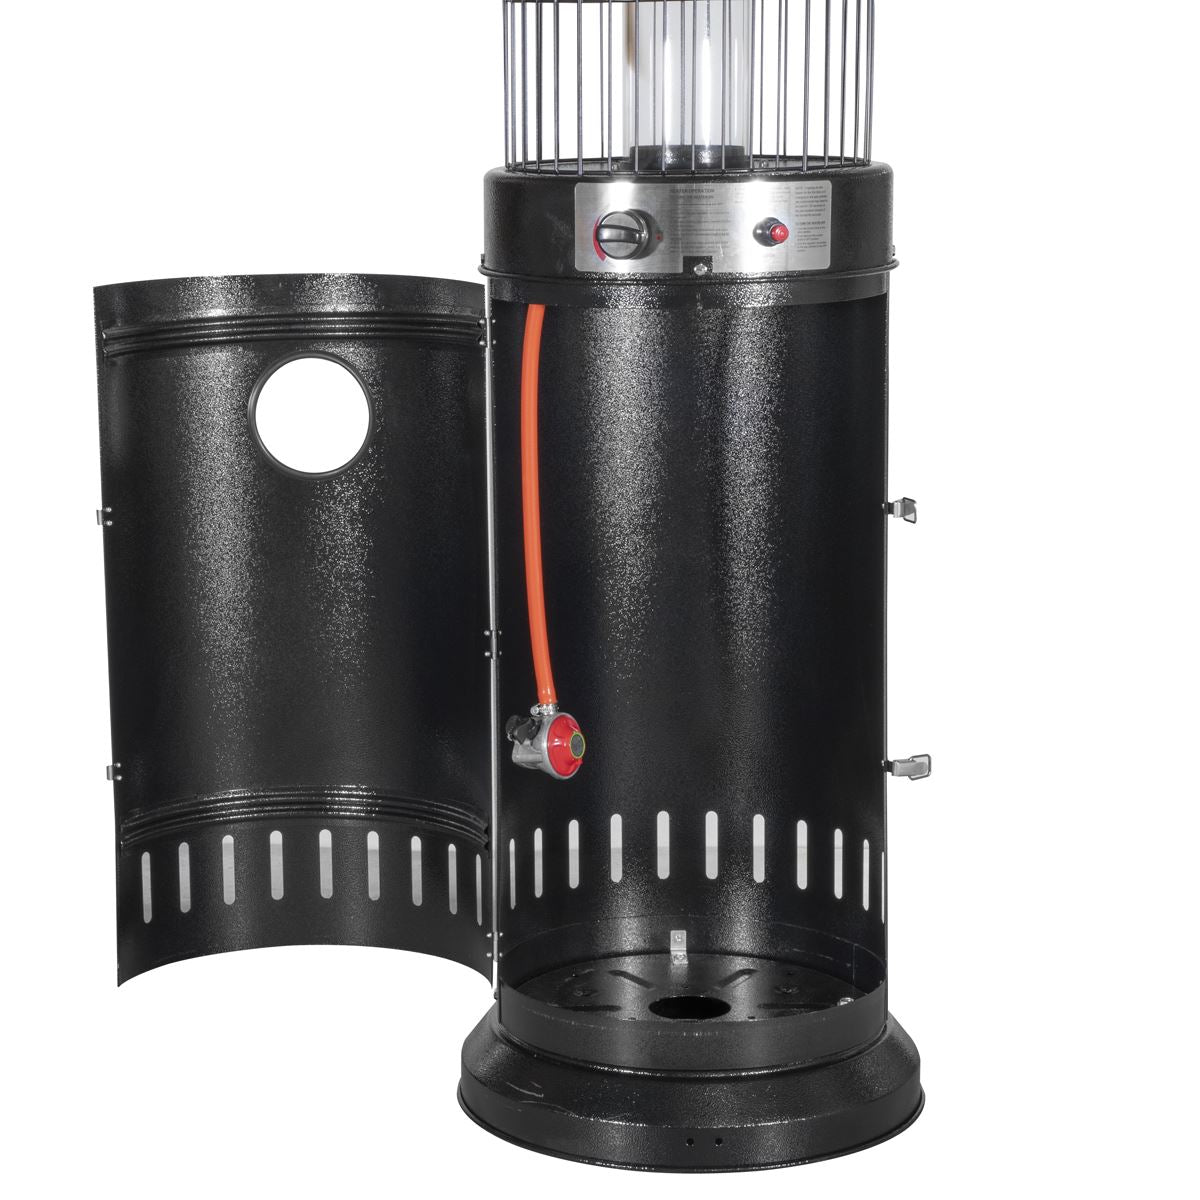 Dellonda Gas Patio Heater 13kW for Commercial & Domestic Use, Black